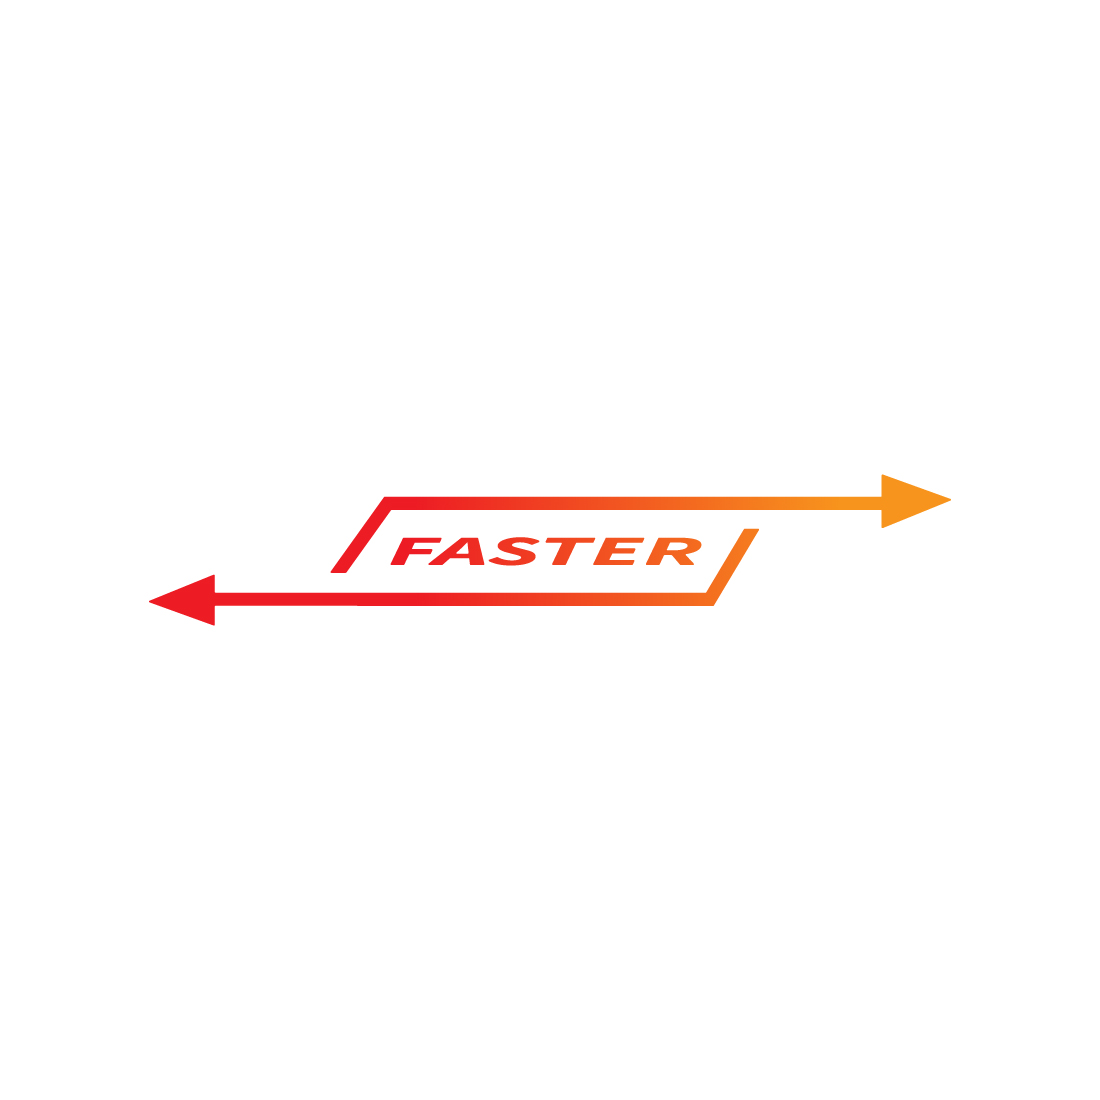 Faster Speed logo design HI speed logo design vector images Speed logo vector template arts Fast logo design monogram best identity preview image.